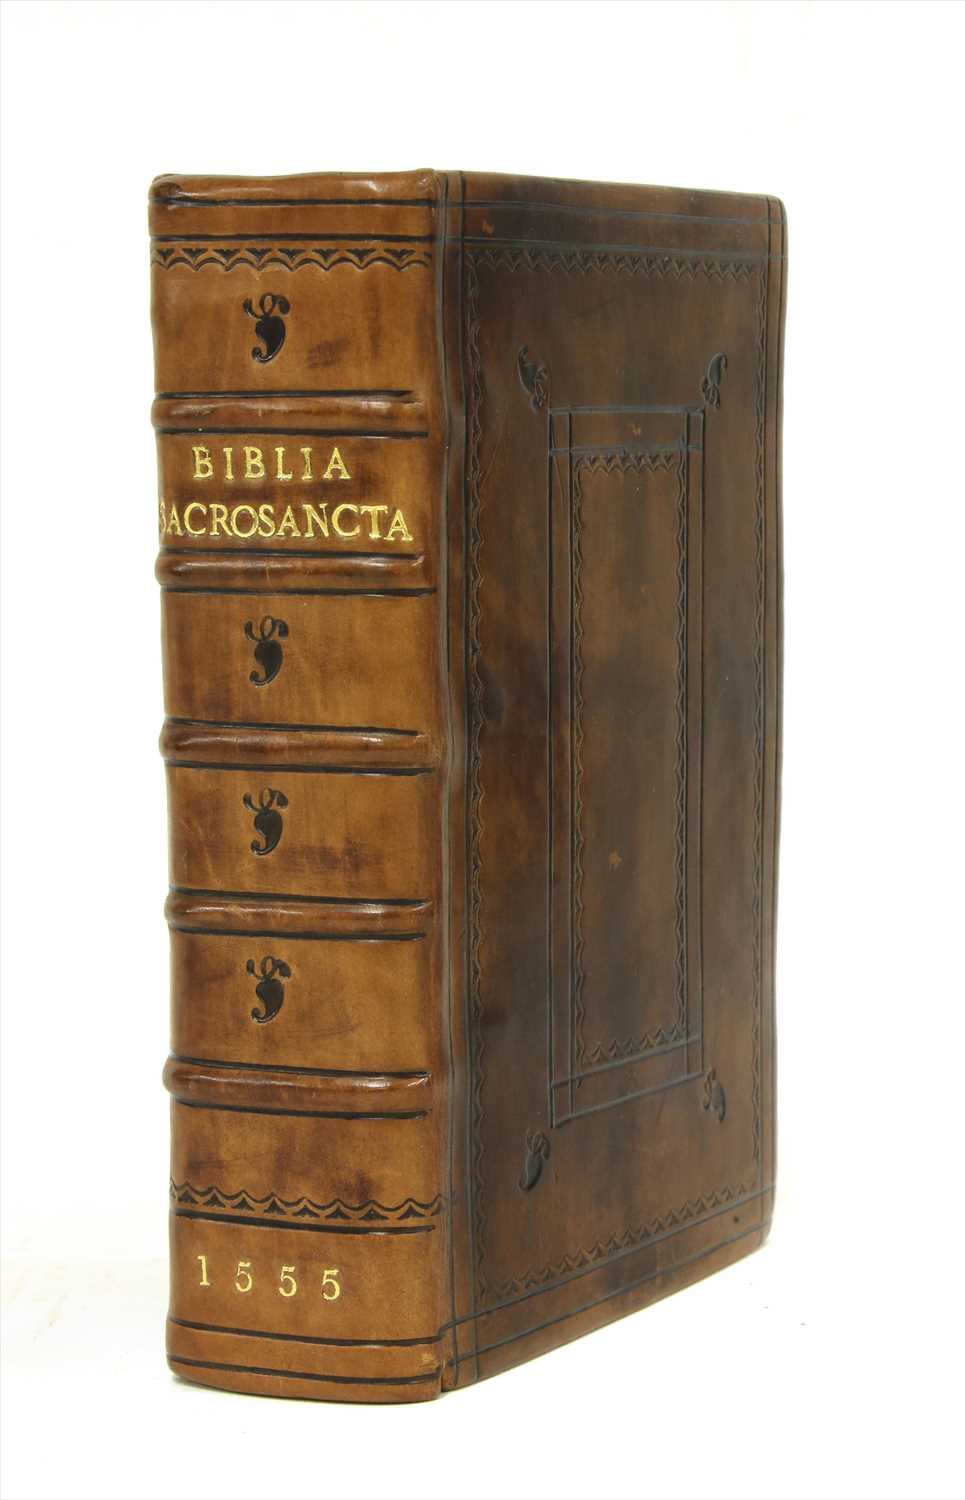 Lot 332 - BIBLE: Biblia sacrosancta Veteris, et Novi Testamenti, Iuxta vulgatam editionem.